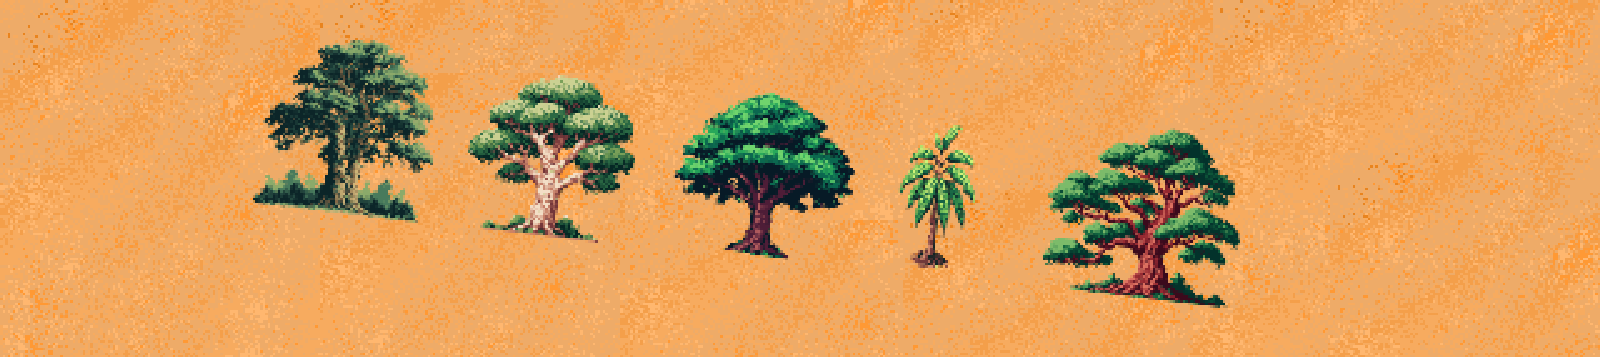 Pixel Art Trees